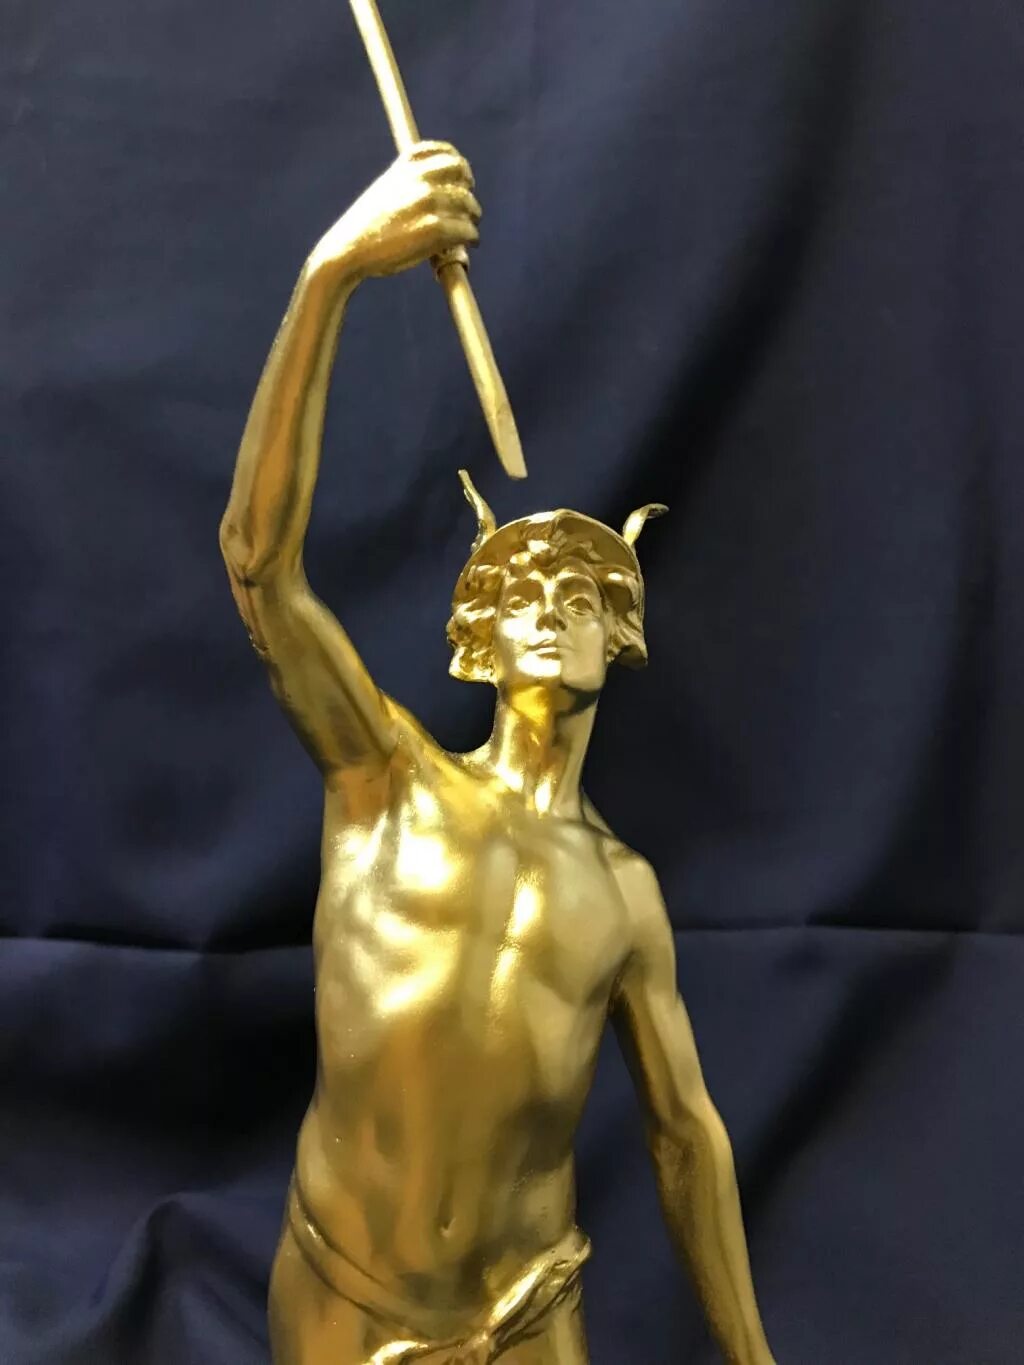 Гермес нижний. Гермес, Эрмий боги торговли. Гермес статуя. Меркурий Бог. Скульптура "Меркурий".